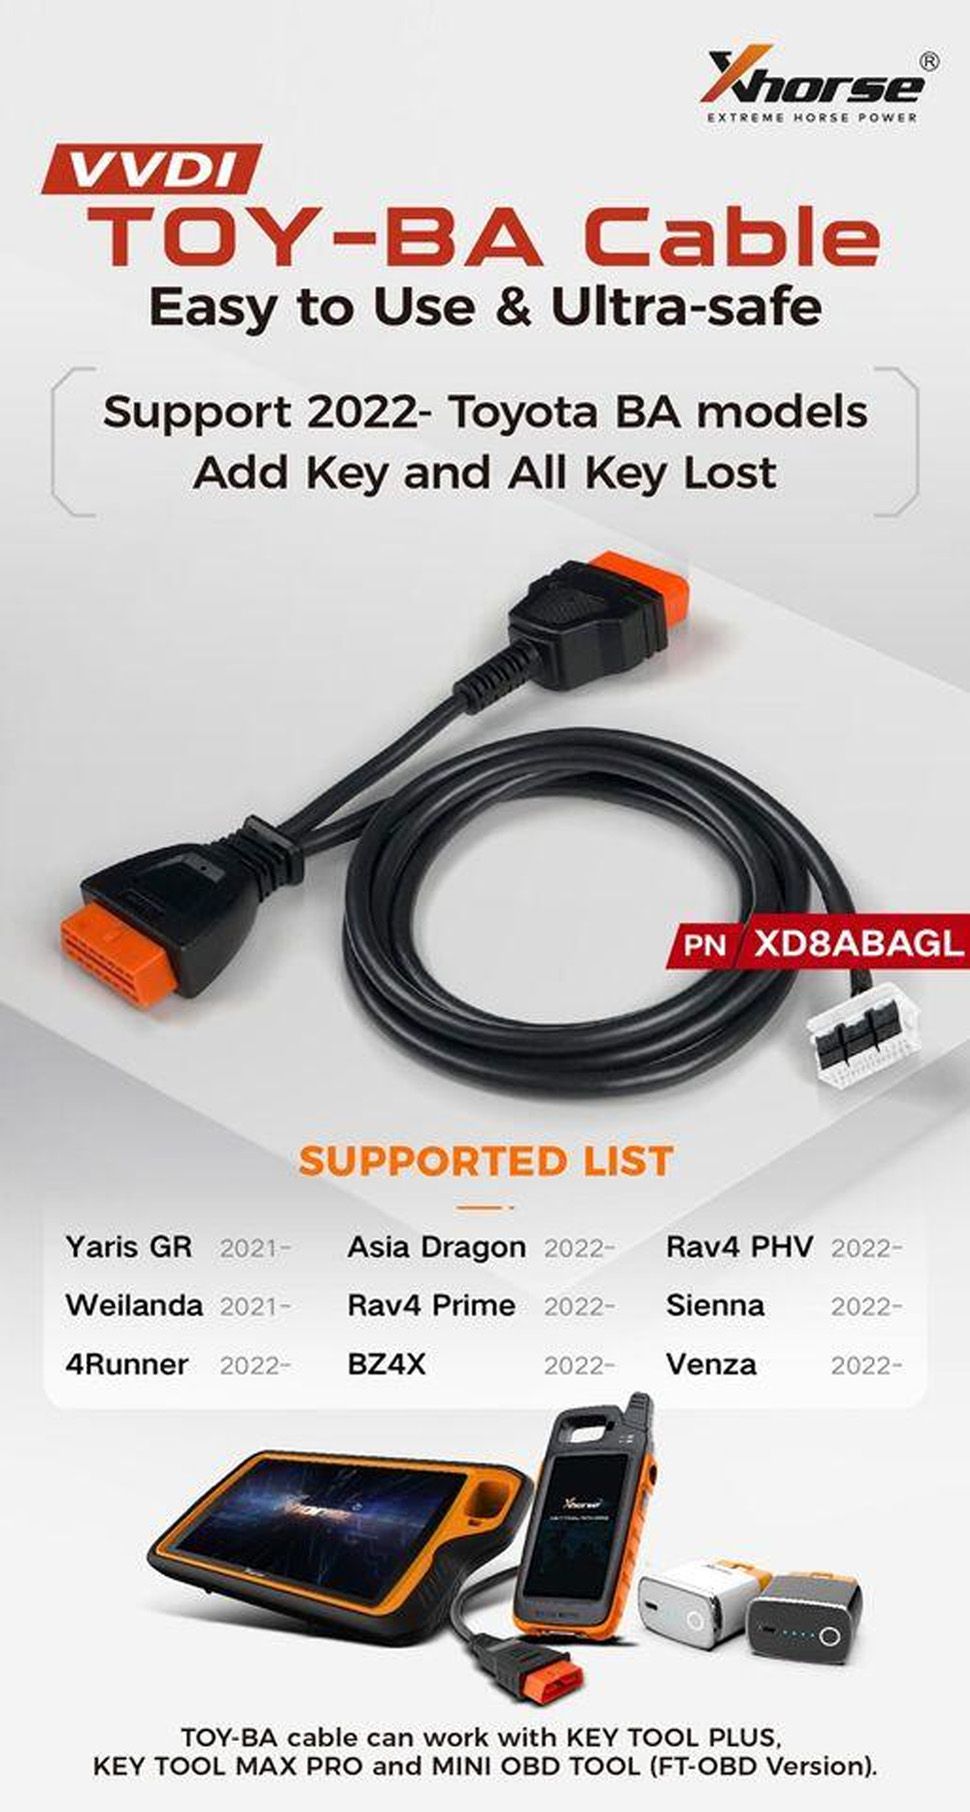 Xhorse Toyota BA All Keys Lost Adapter KD8ABAGL